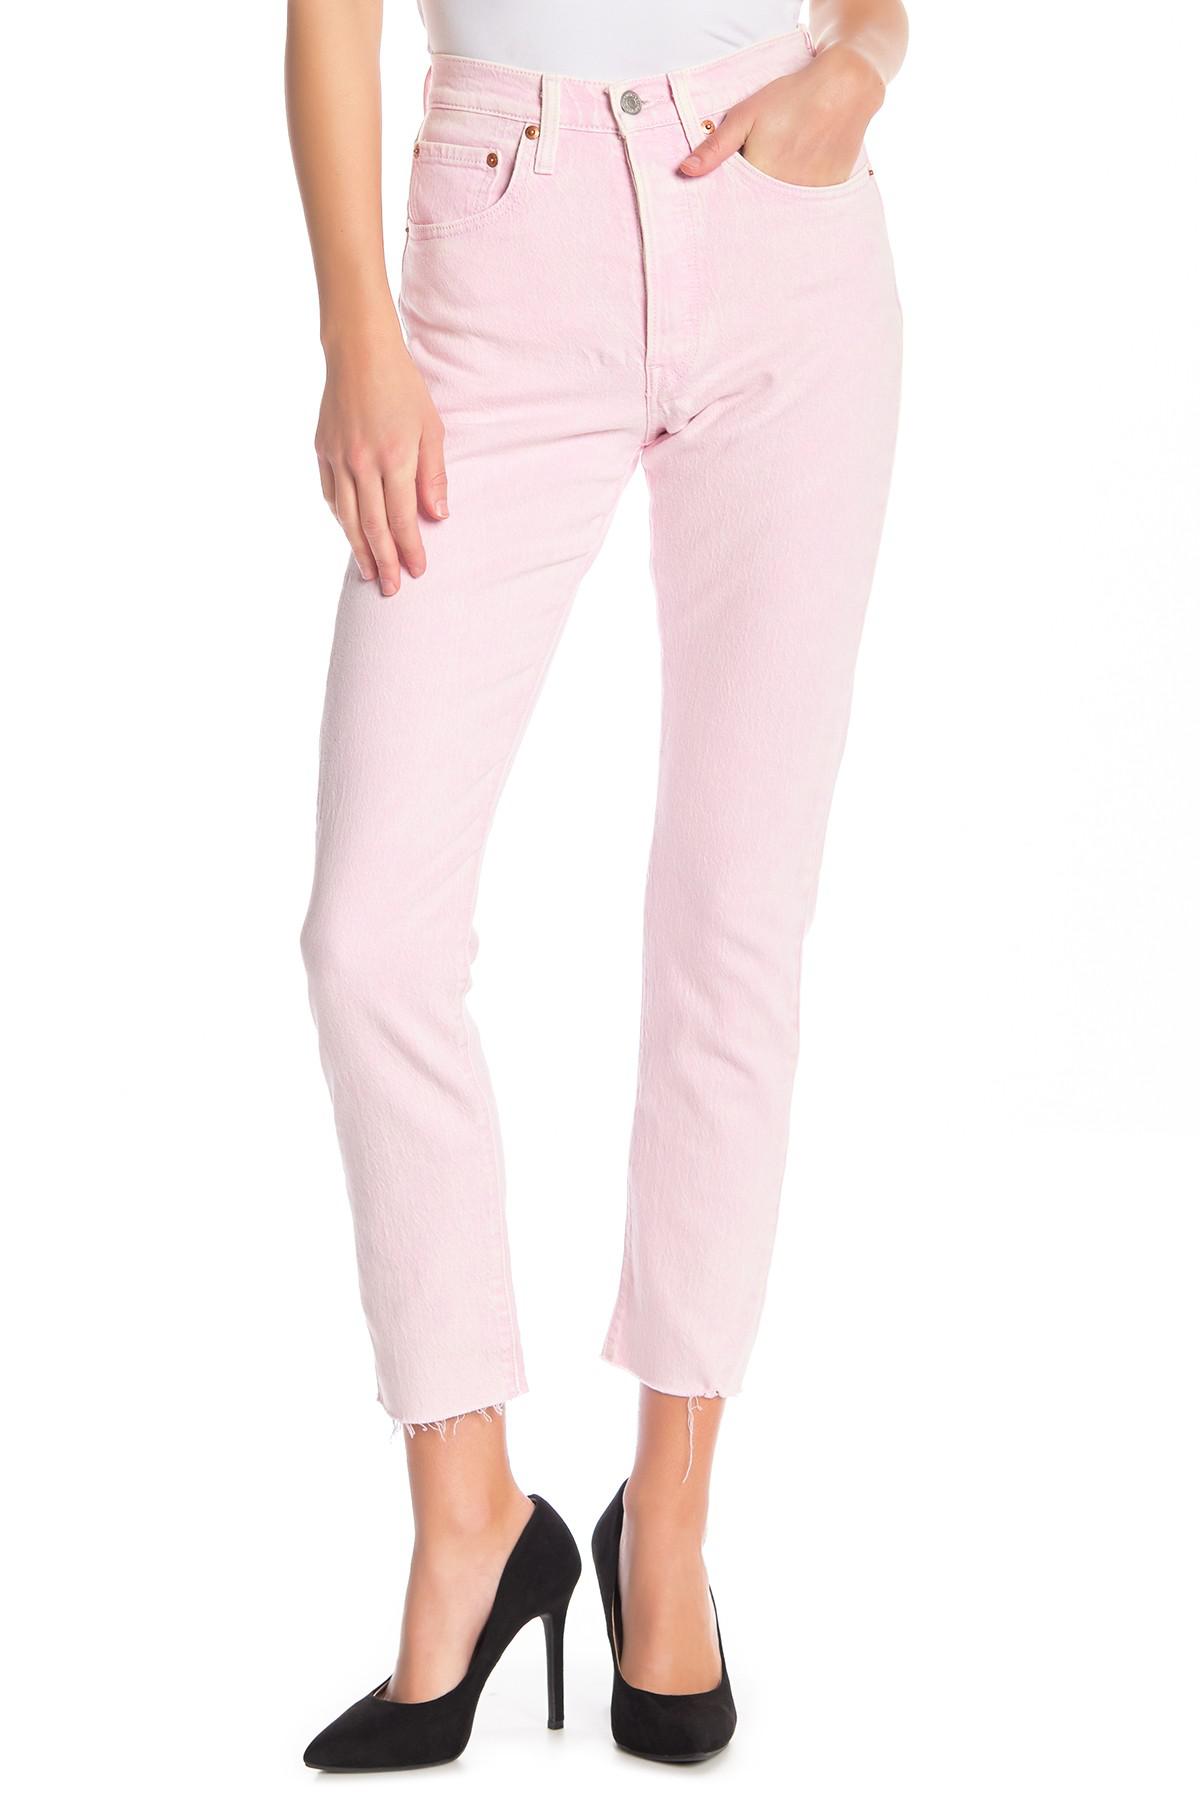 pink levis jeans 501 off 64% - www 